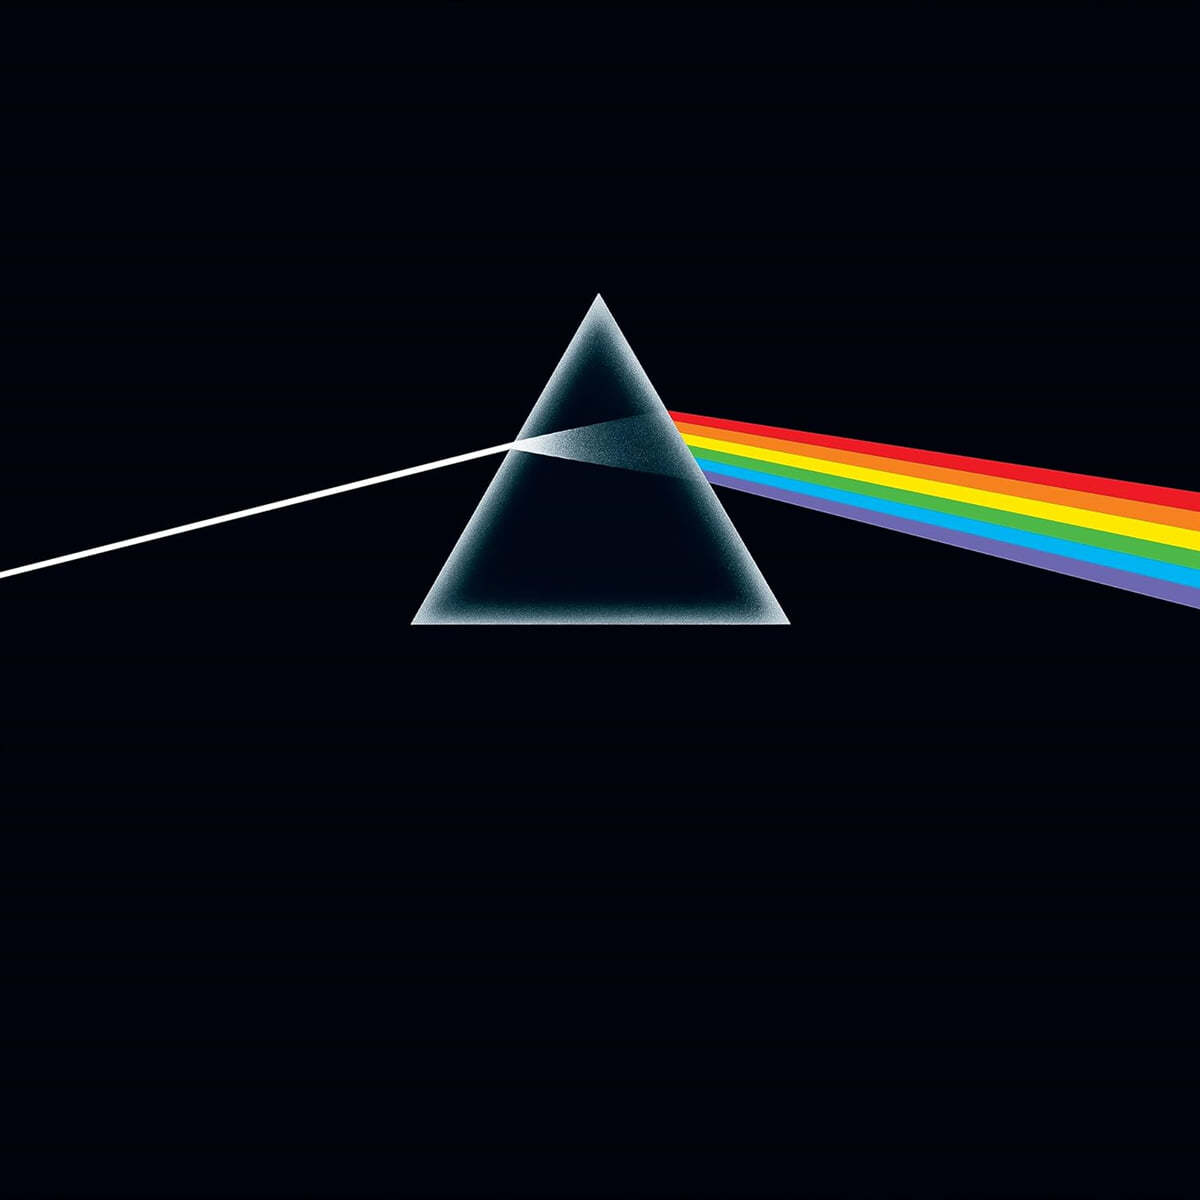 Pink Floyd (핑크 플로이드) - The Dark Side Of The Moon [LP]